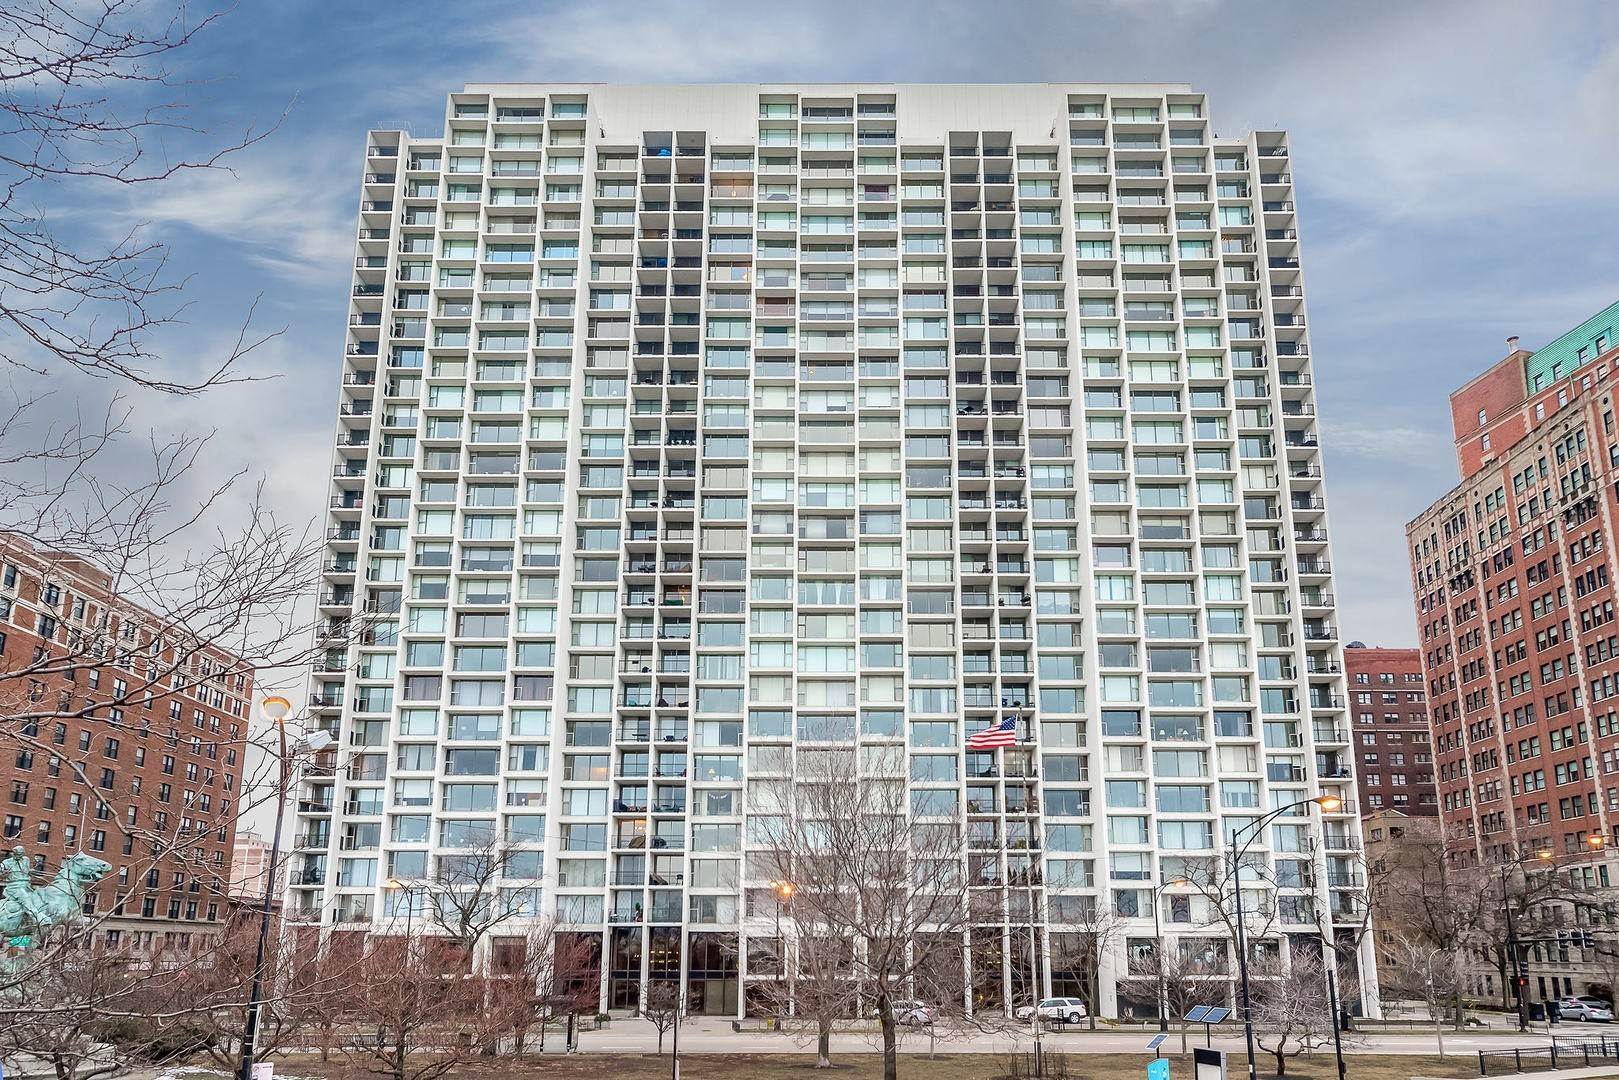 Condominium at Lake View East, Chicago, IL 60657